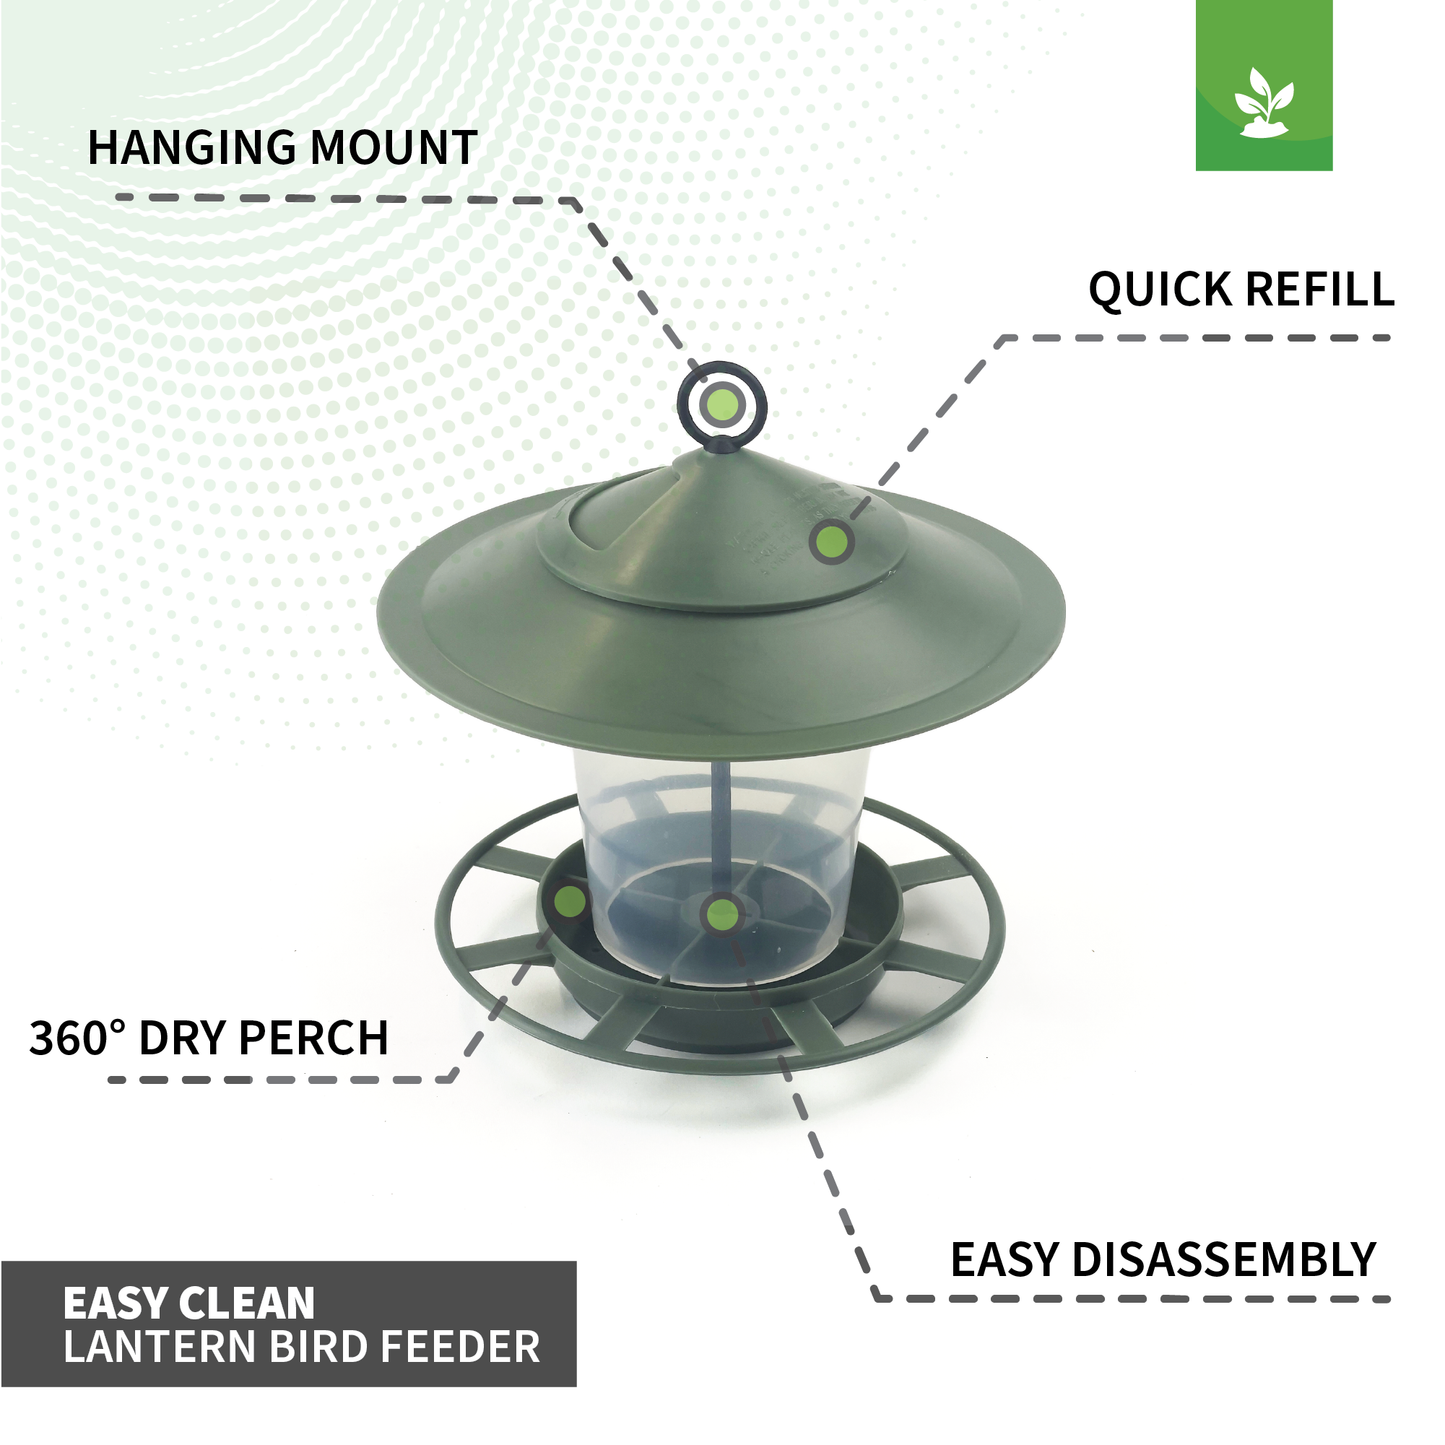 Easy Clean Lantern Bird Feeder - Prevent Disease & Protect Wildlife-1